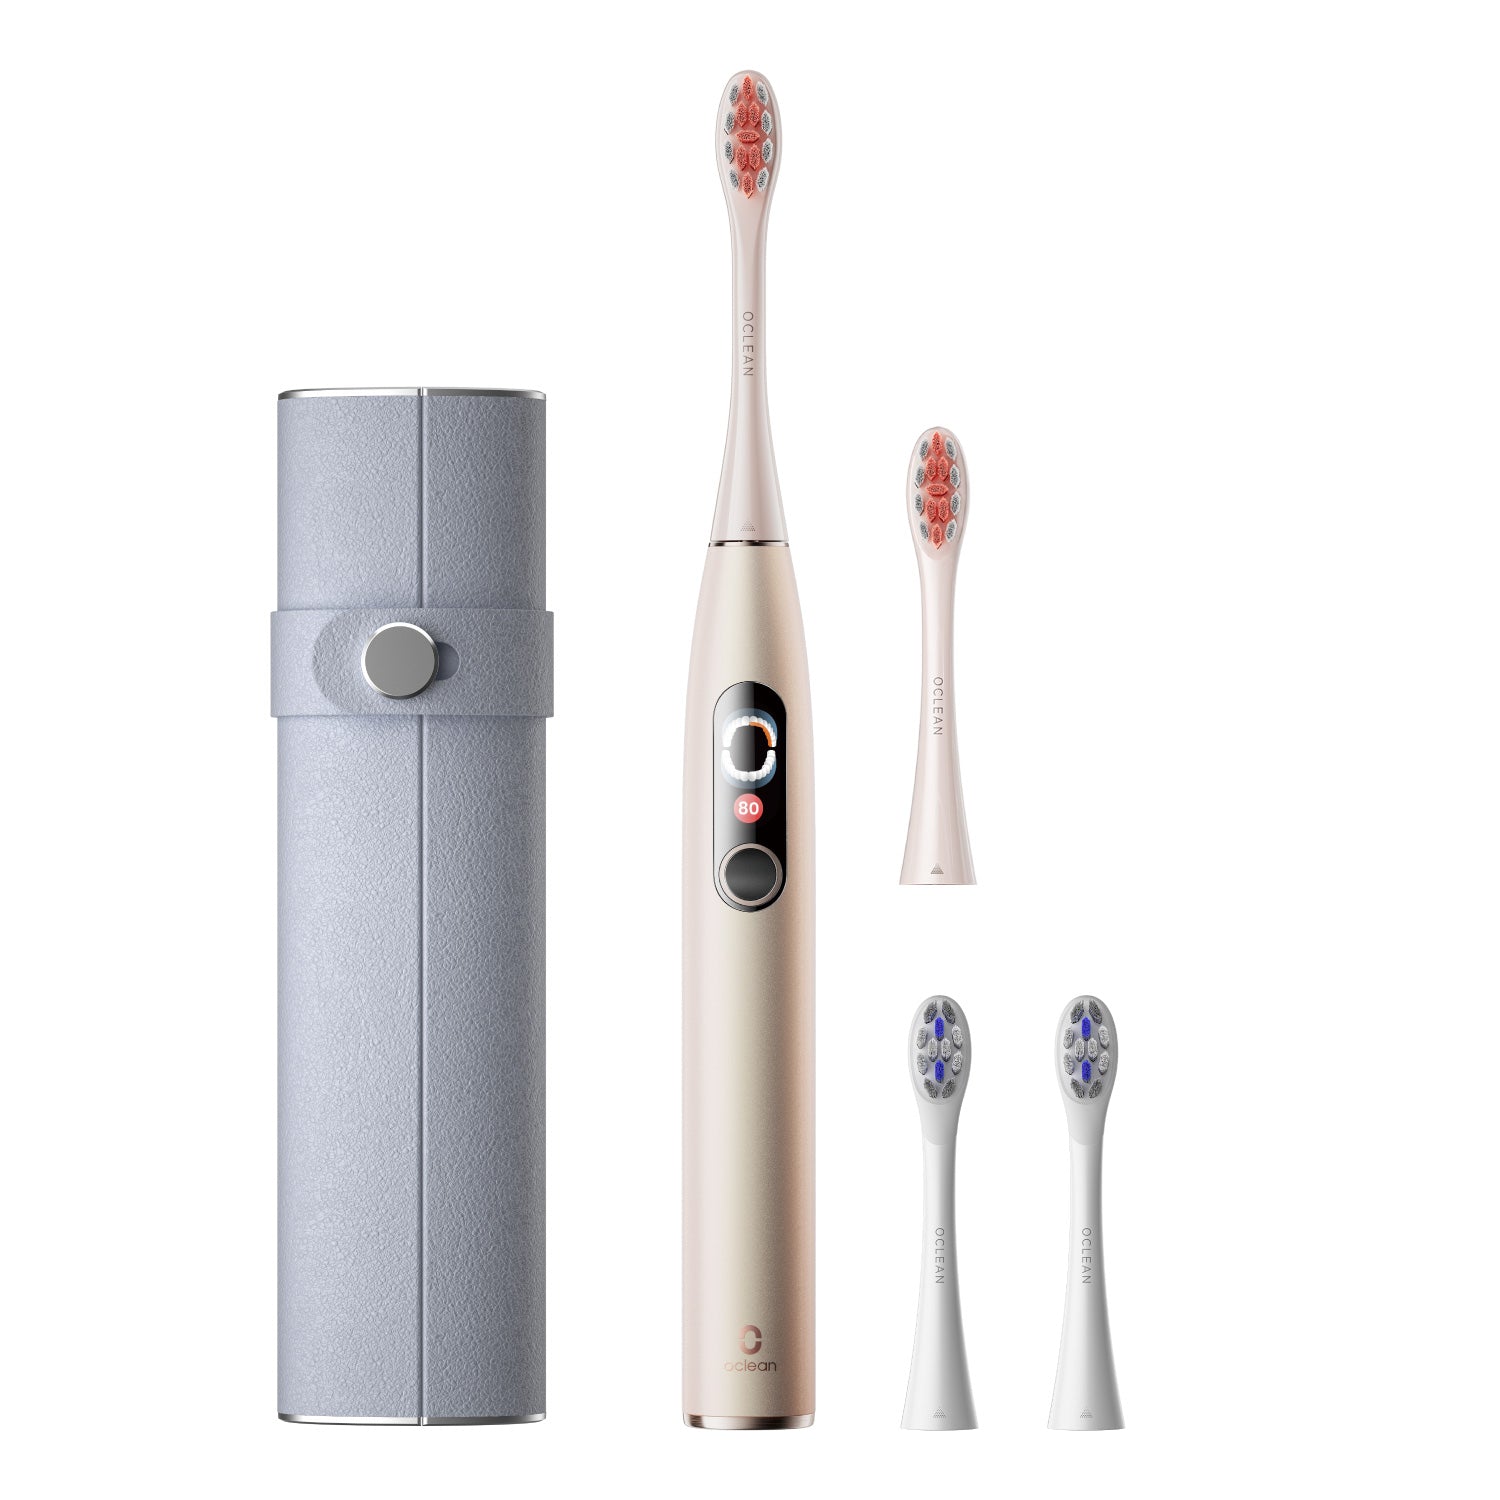 Oclean X Pro Digital Premium Set-Toothbrushes-Oclean US Store